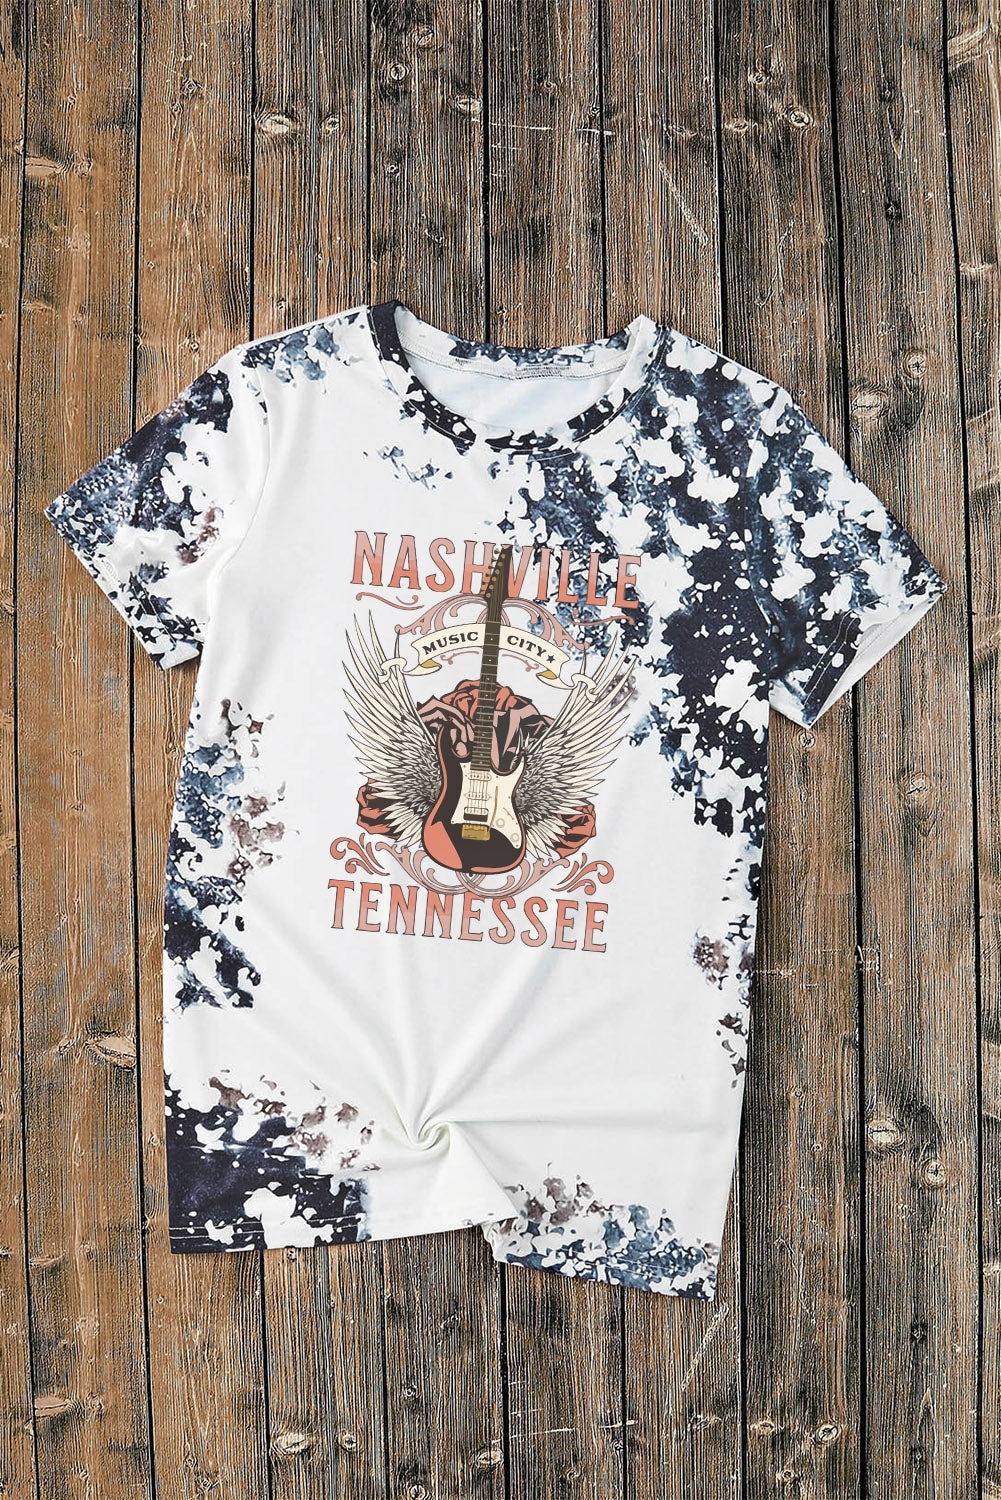 Gray Tie Dye NASHVILLE TENNESSEE Guitar Graphic T-shirt Graphic Tees JT's Designer Fashion